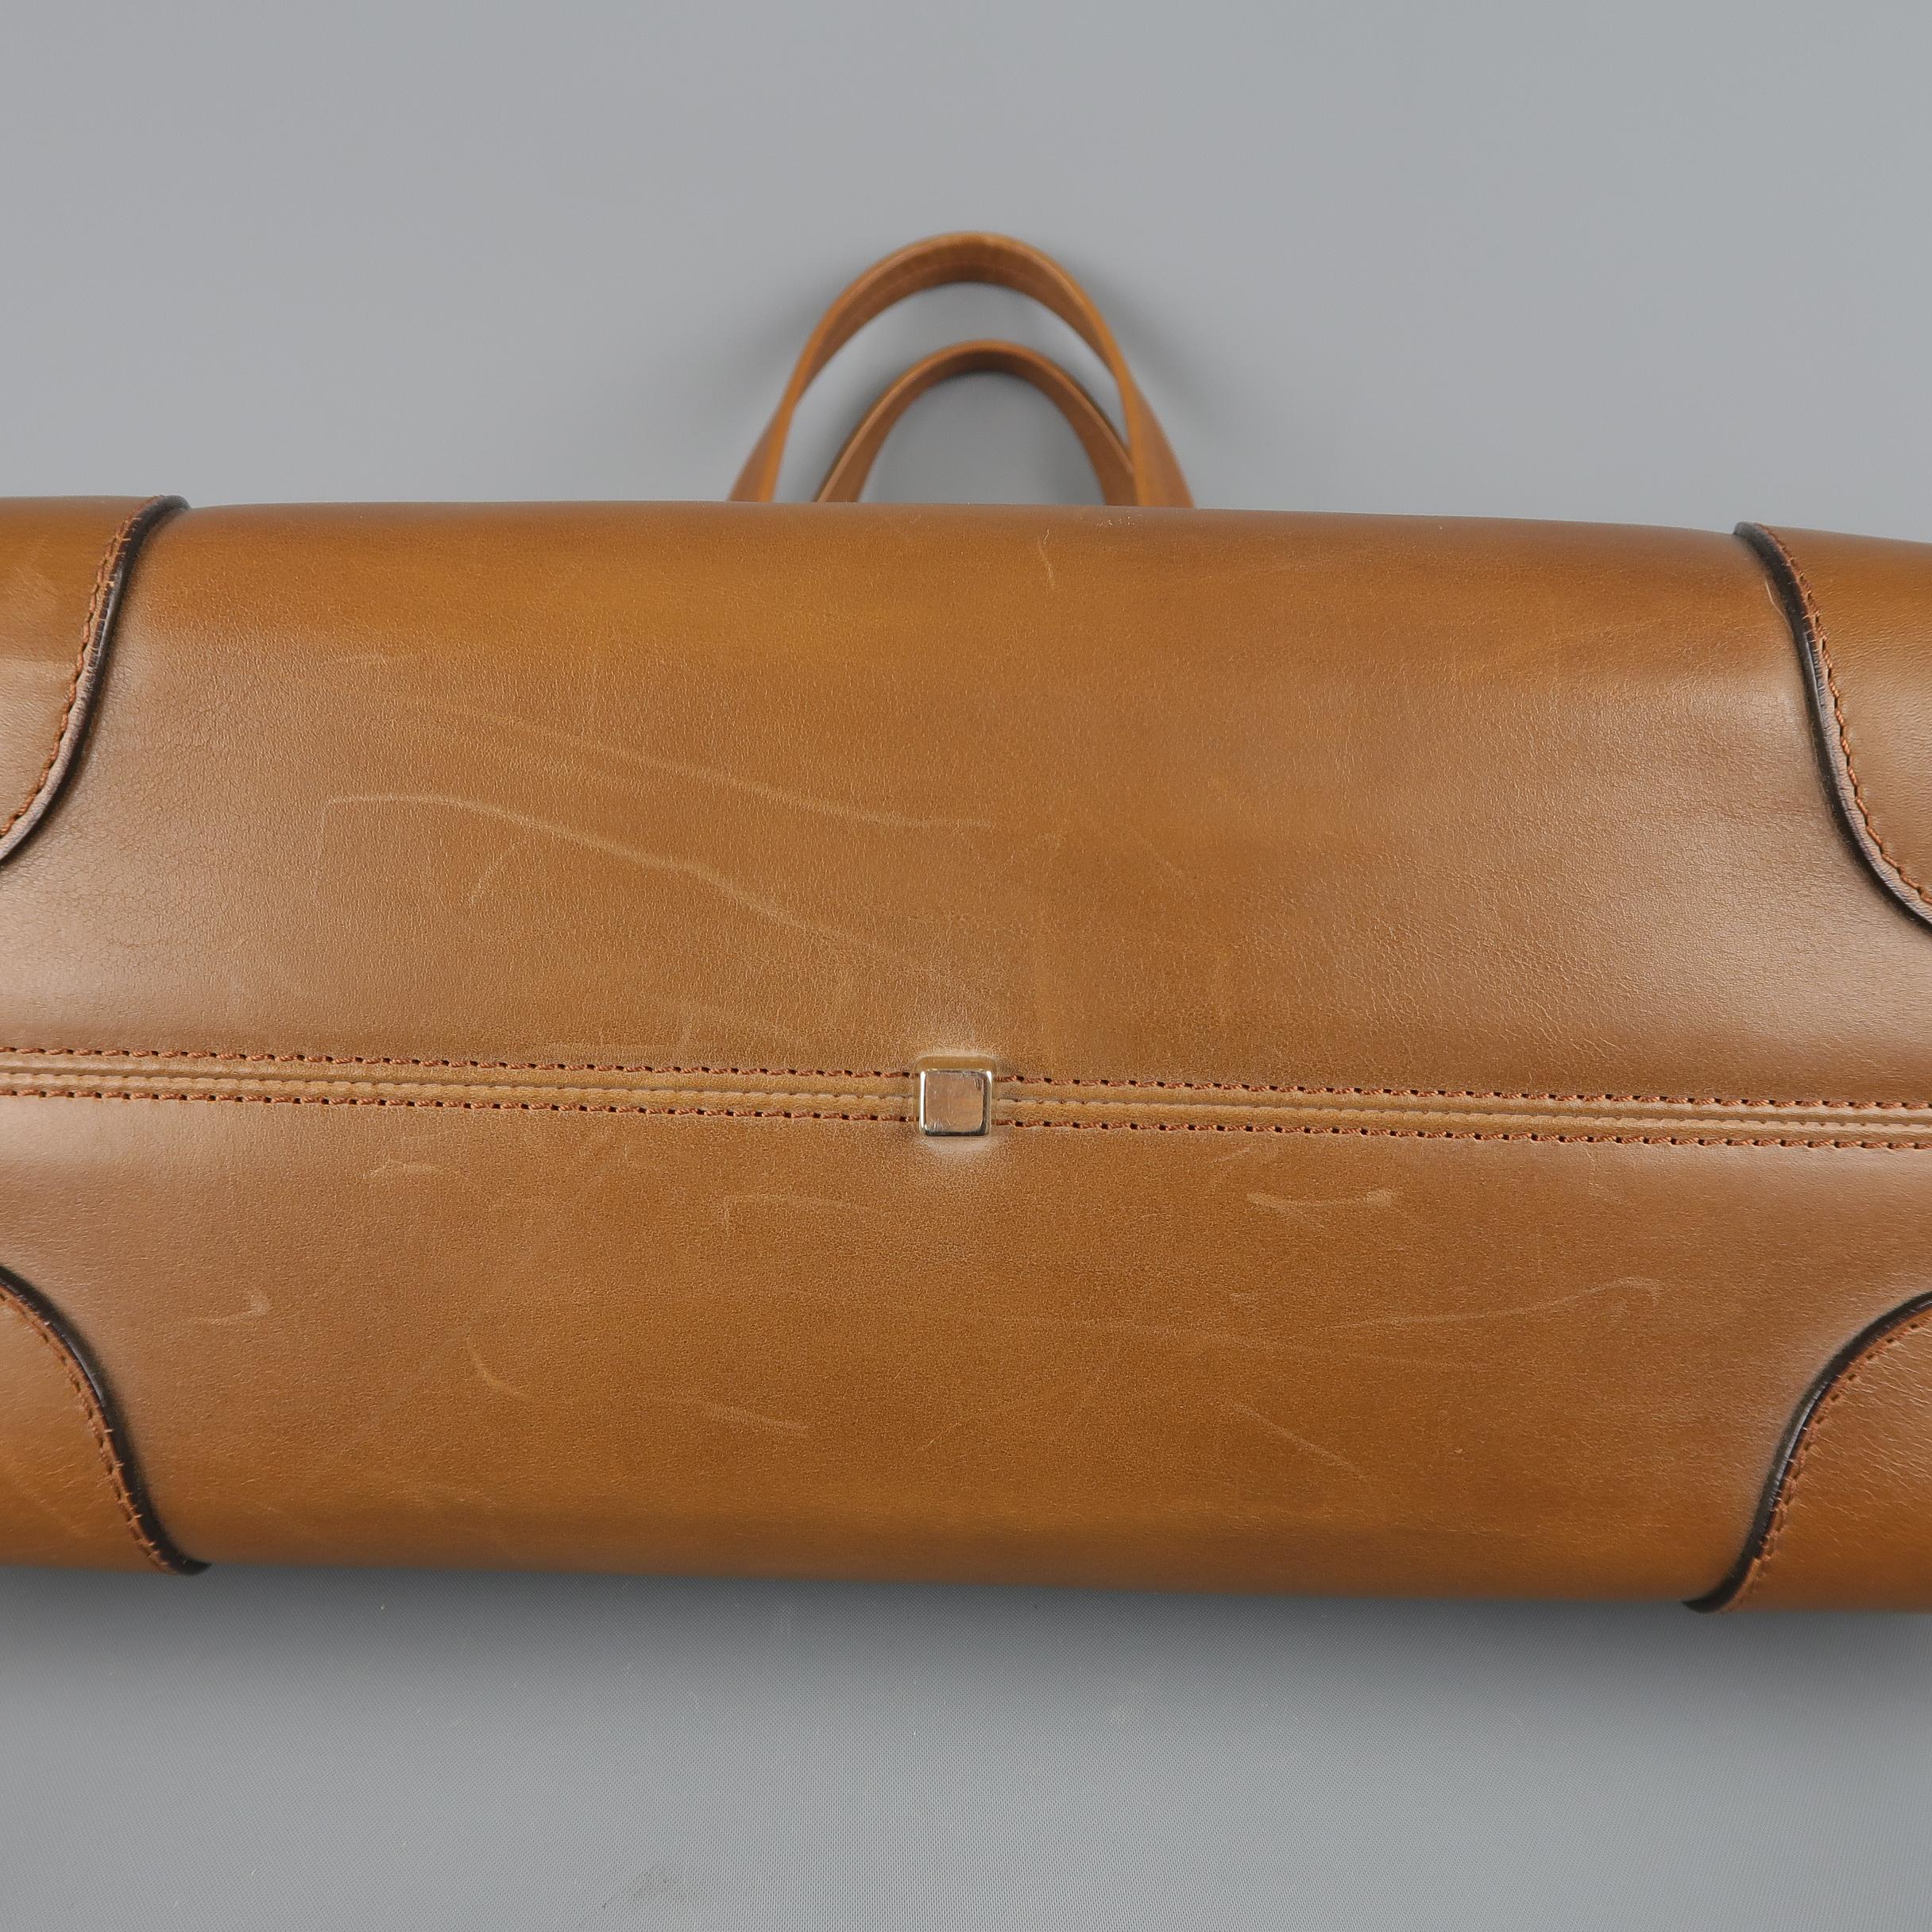 VALEXTRA Light Brown Leather Babila Tote Top Handle Handbag 5